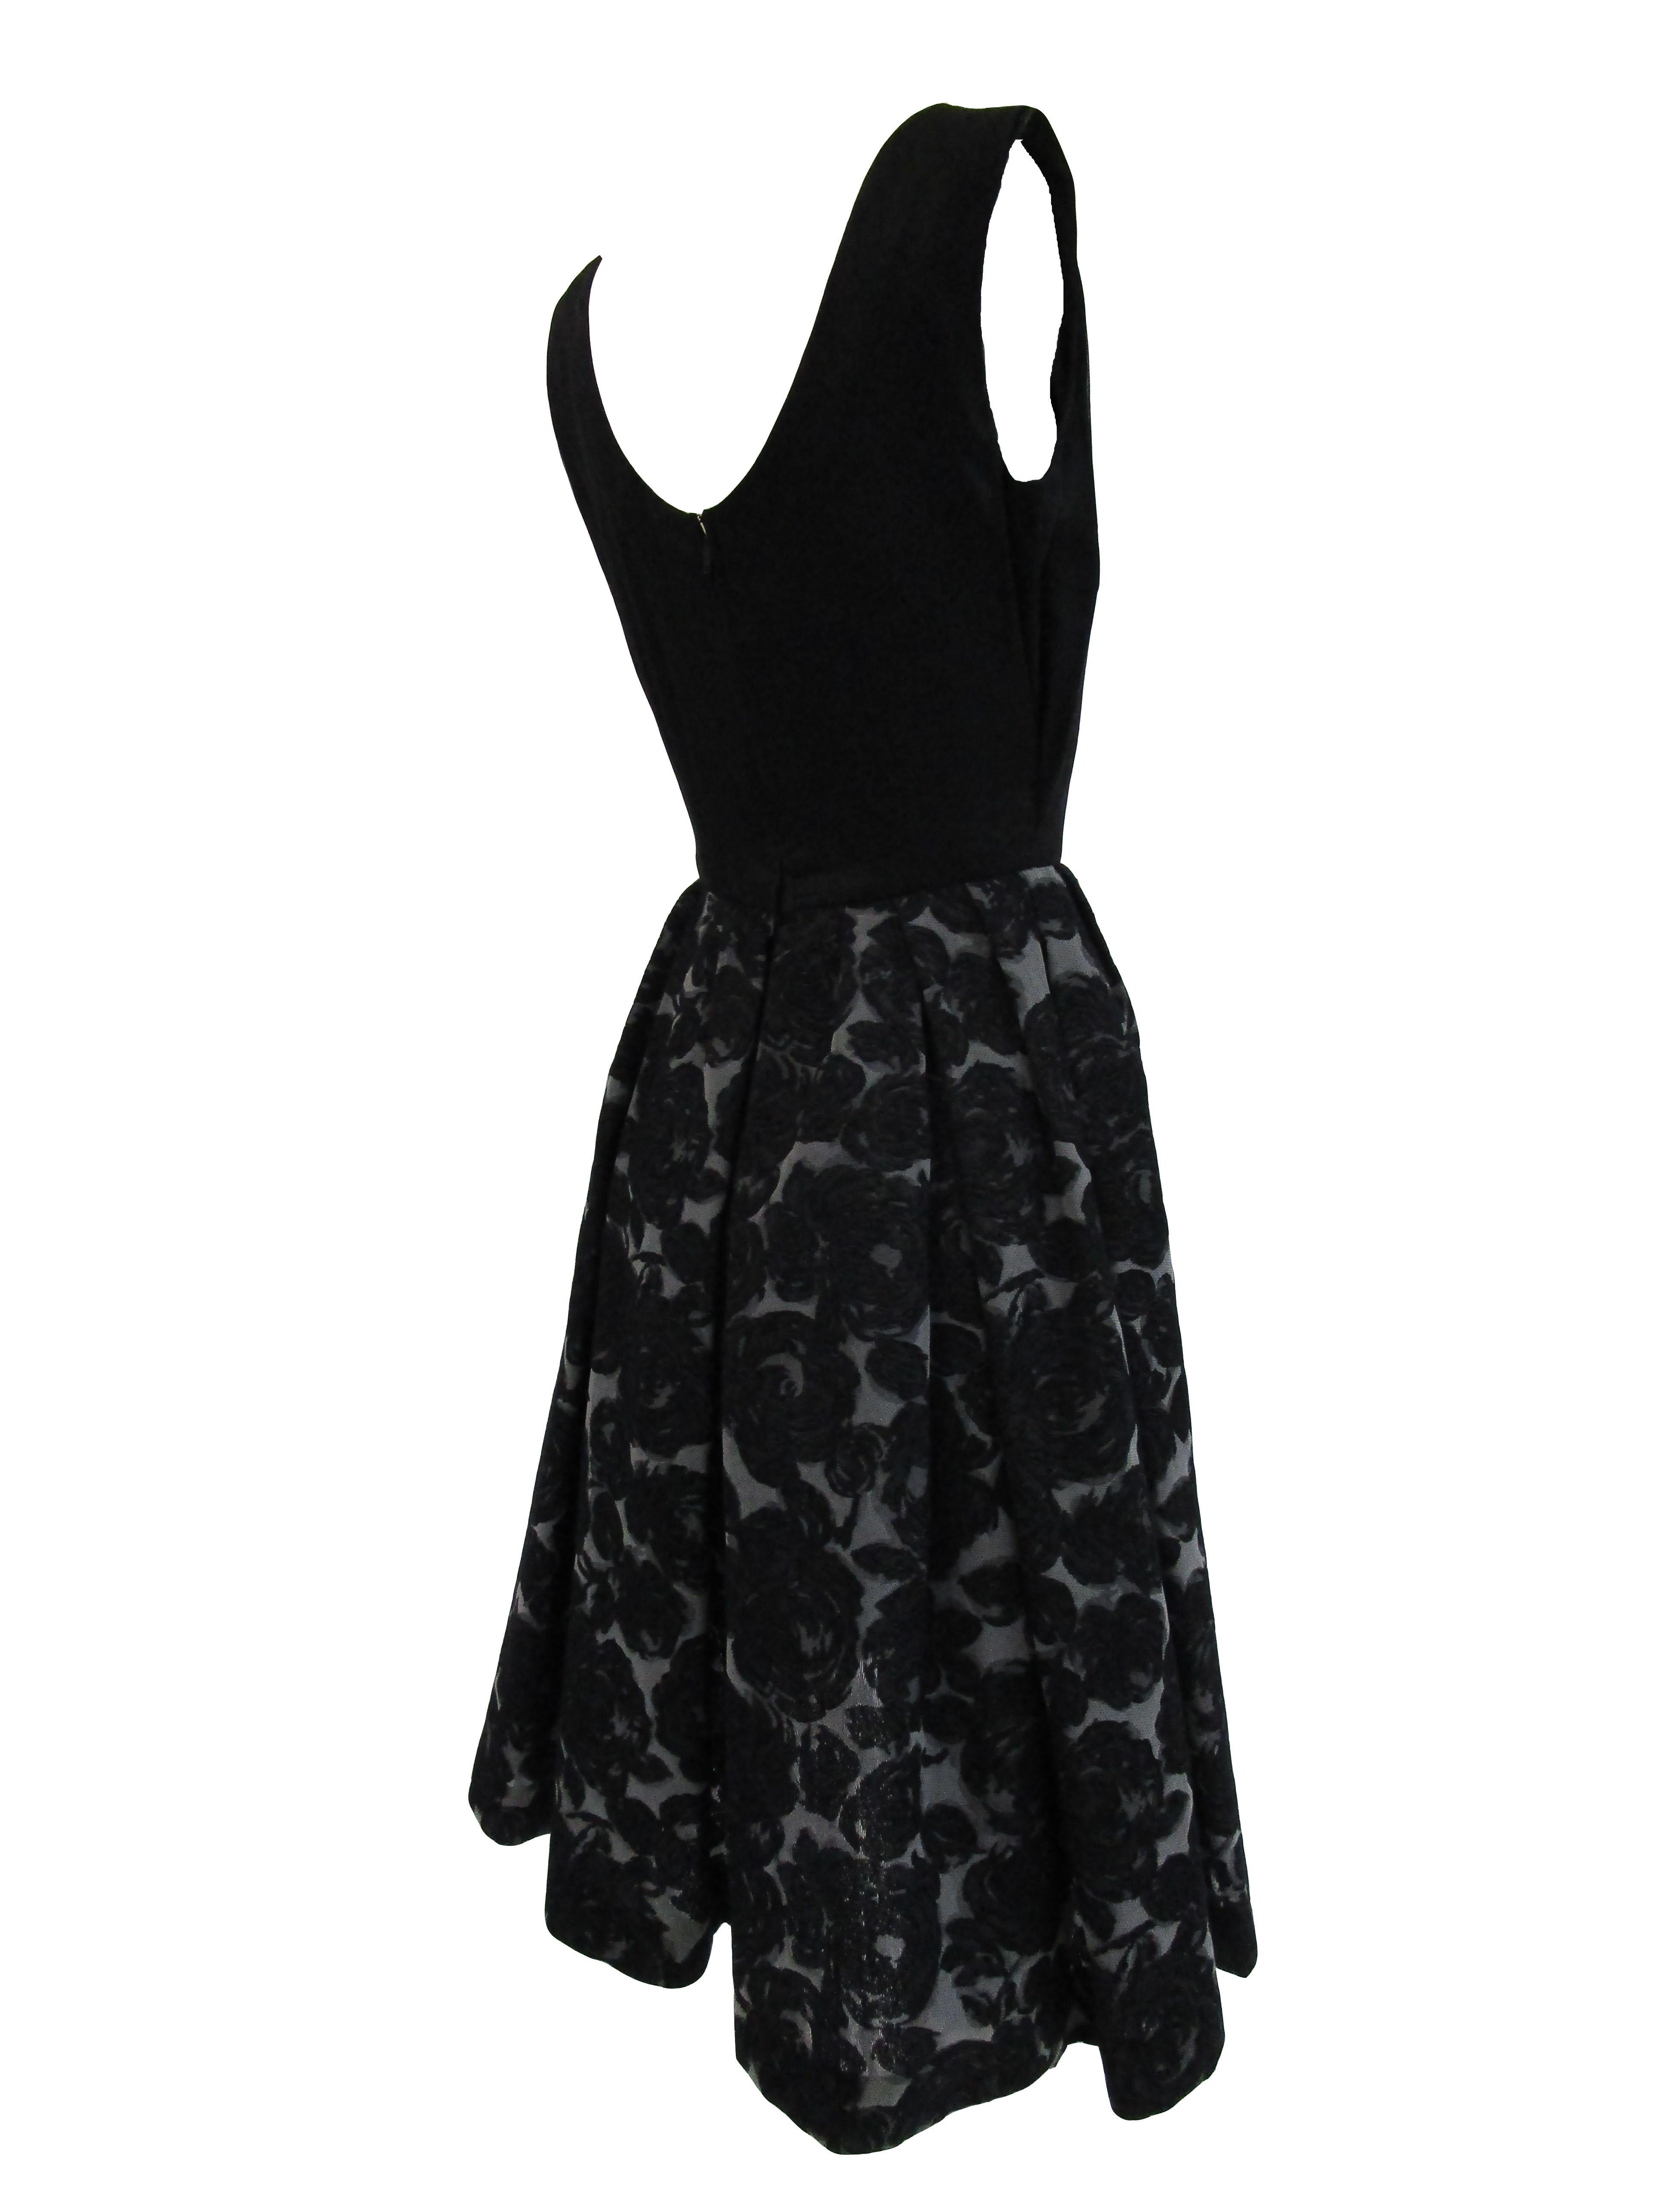 Rare 1950s Madame Gres licensed Black & Grey Embroidered Dress w/ Bolero Jacket For Sale 2